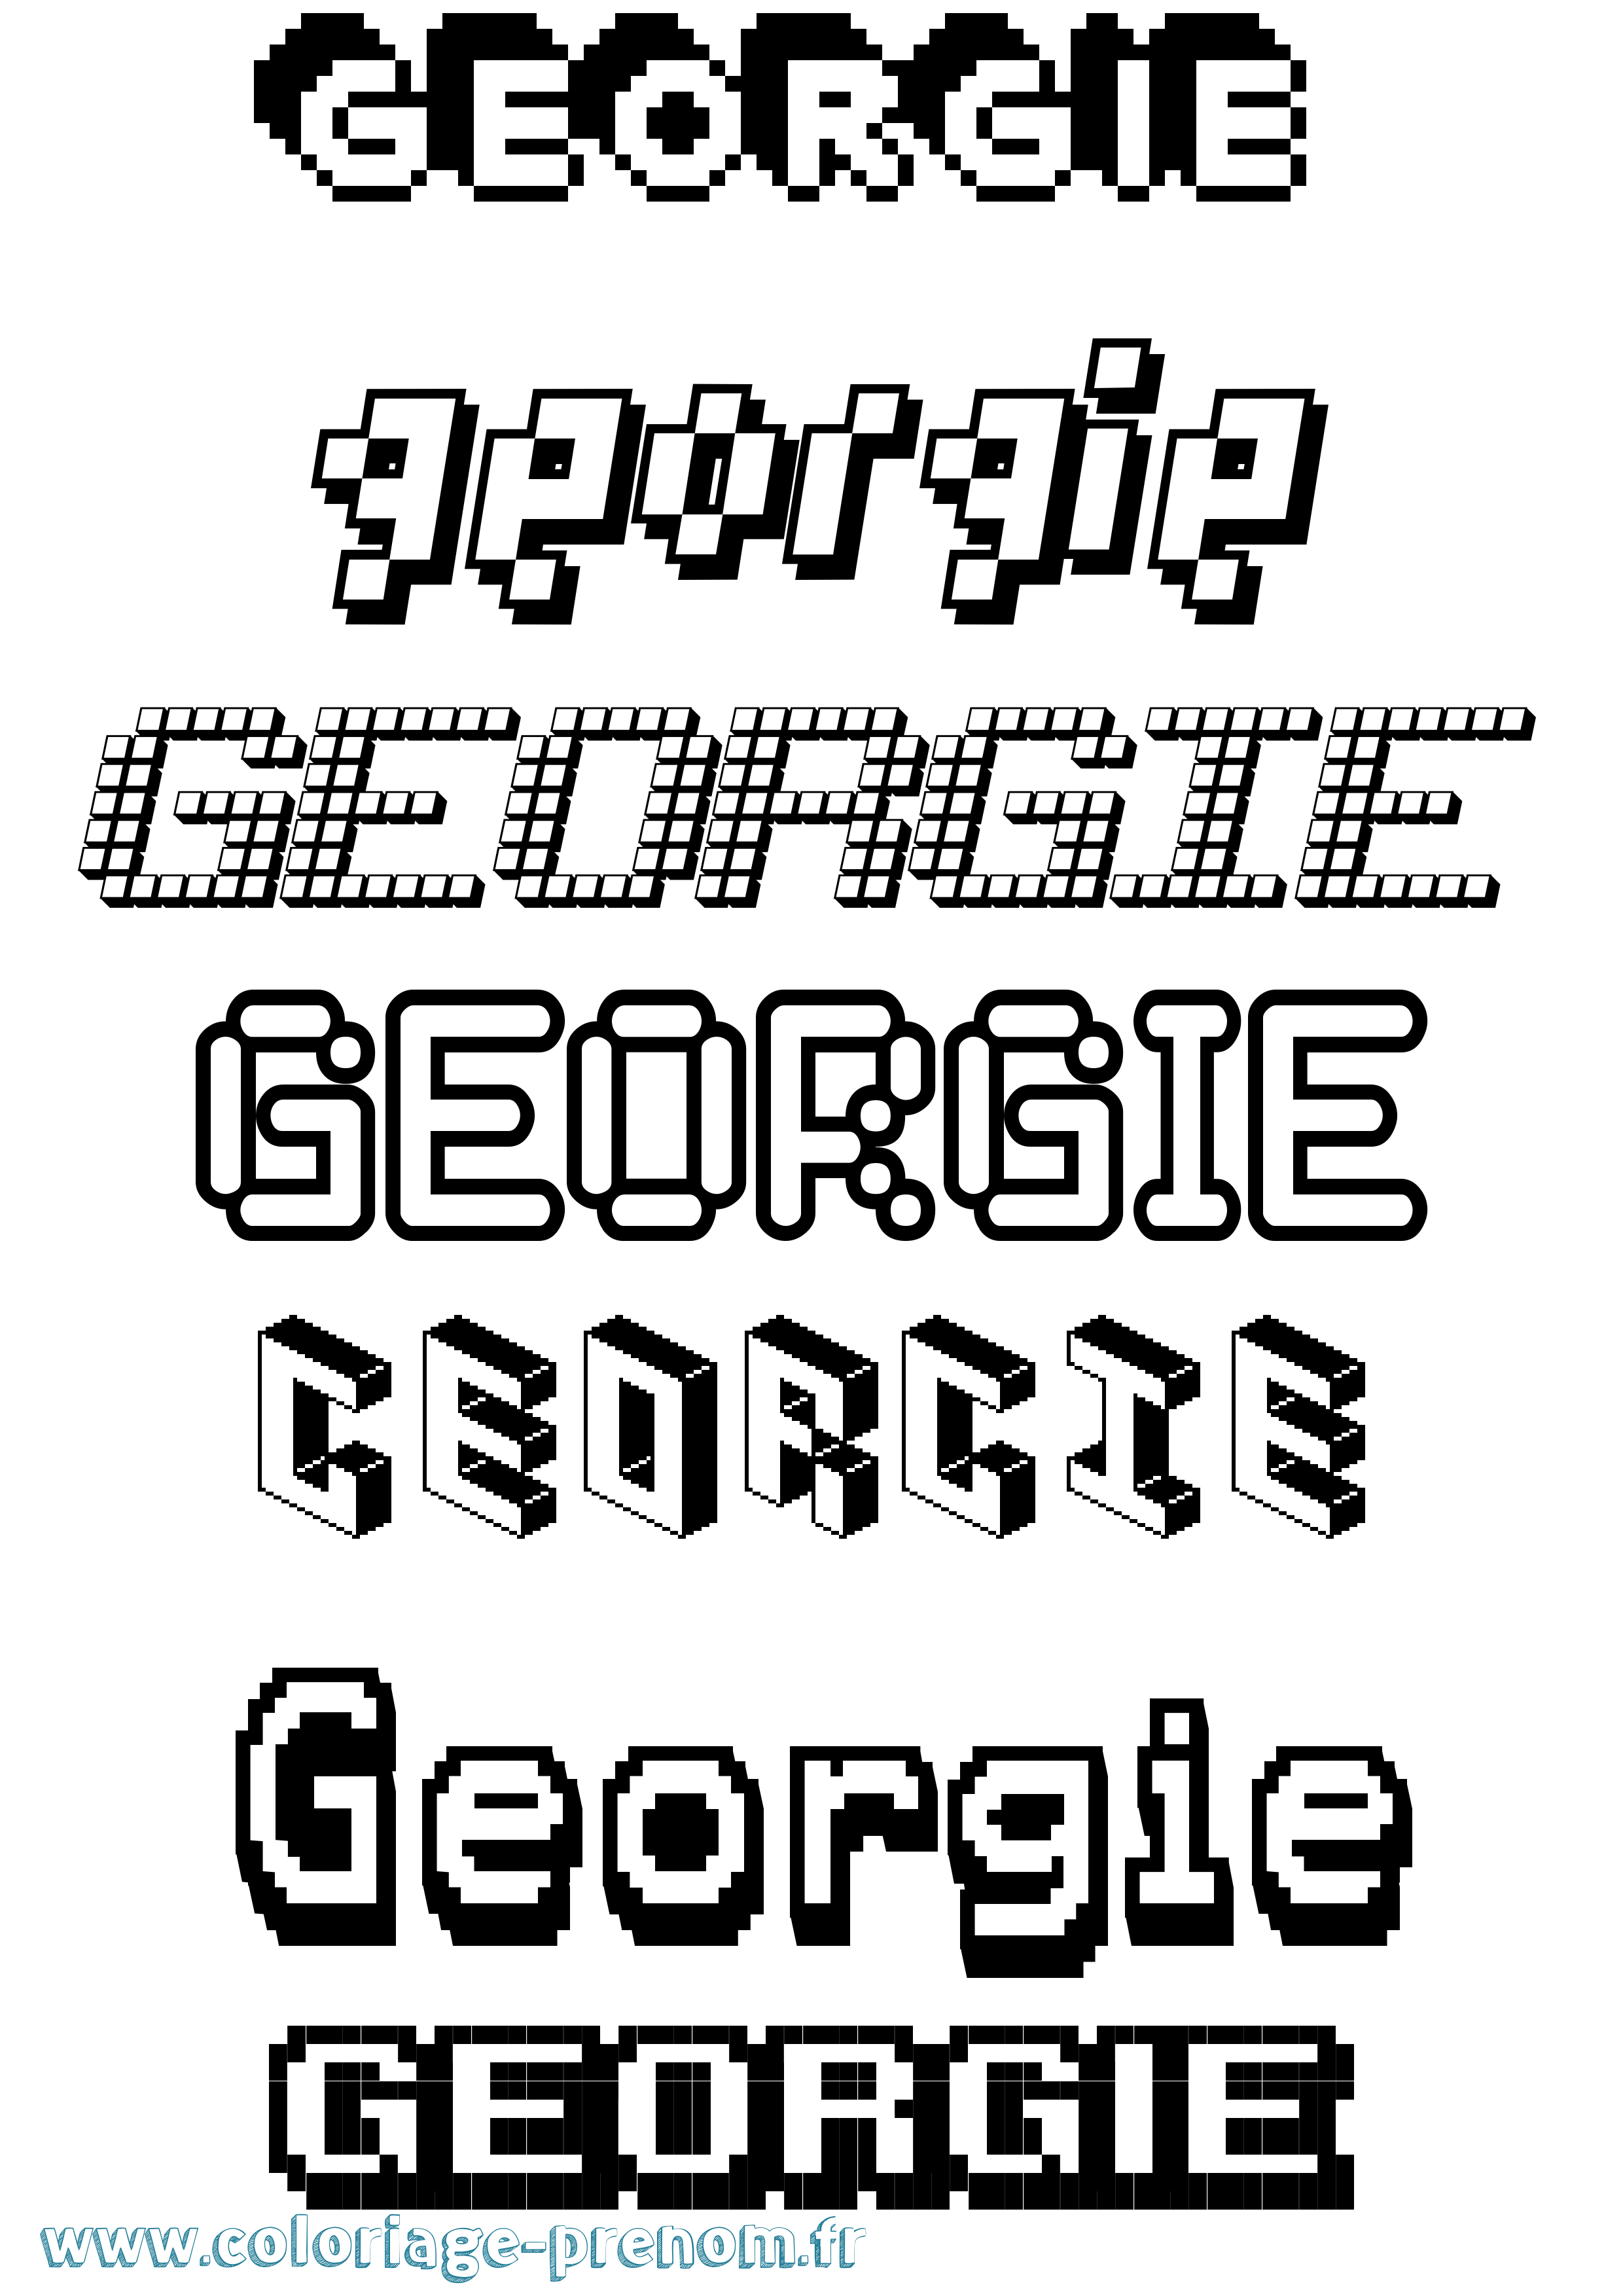 Coloriage prénom Georgie Pixel